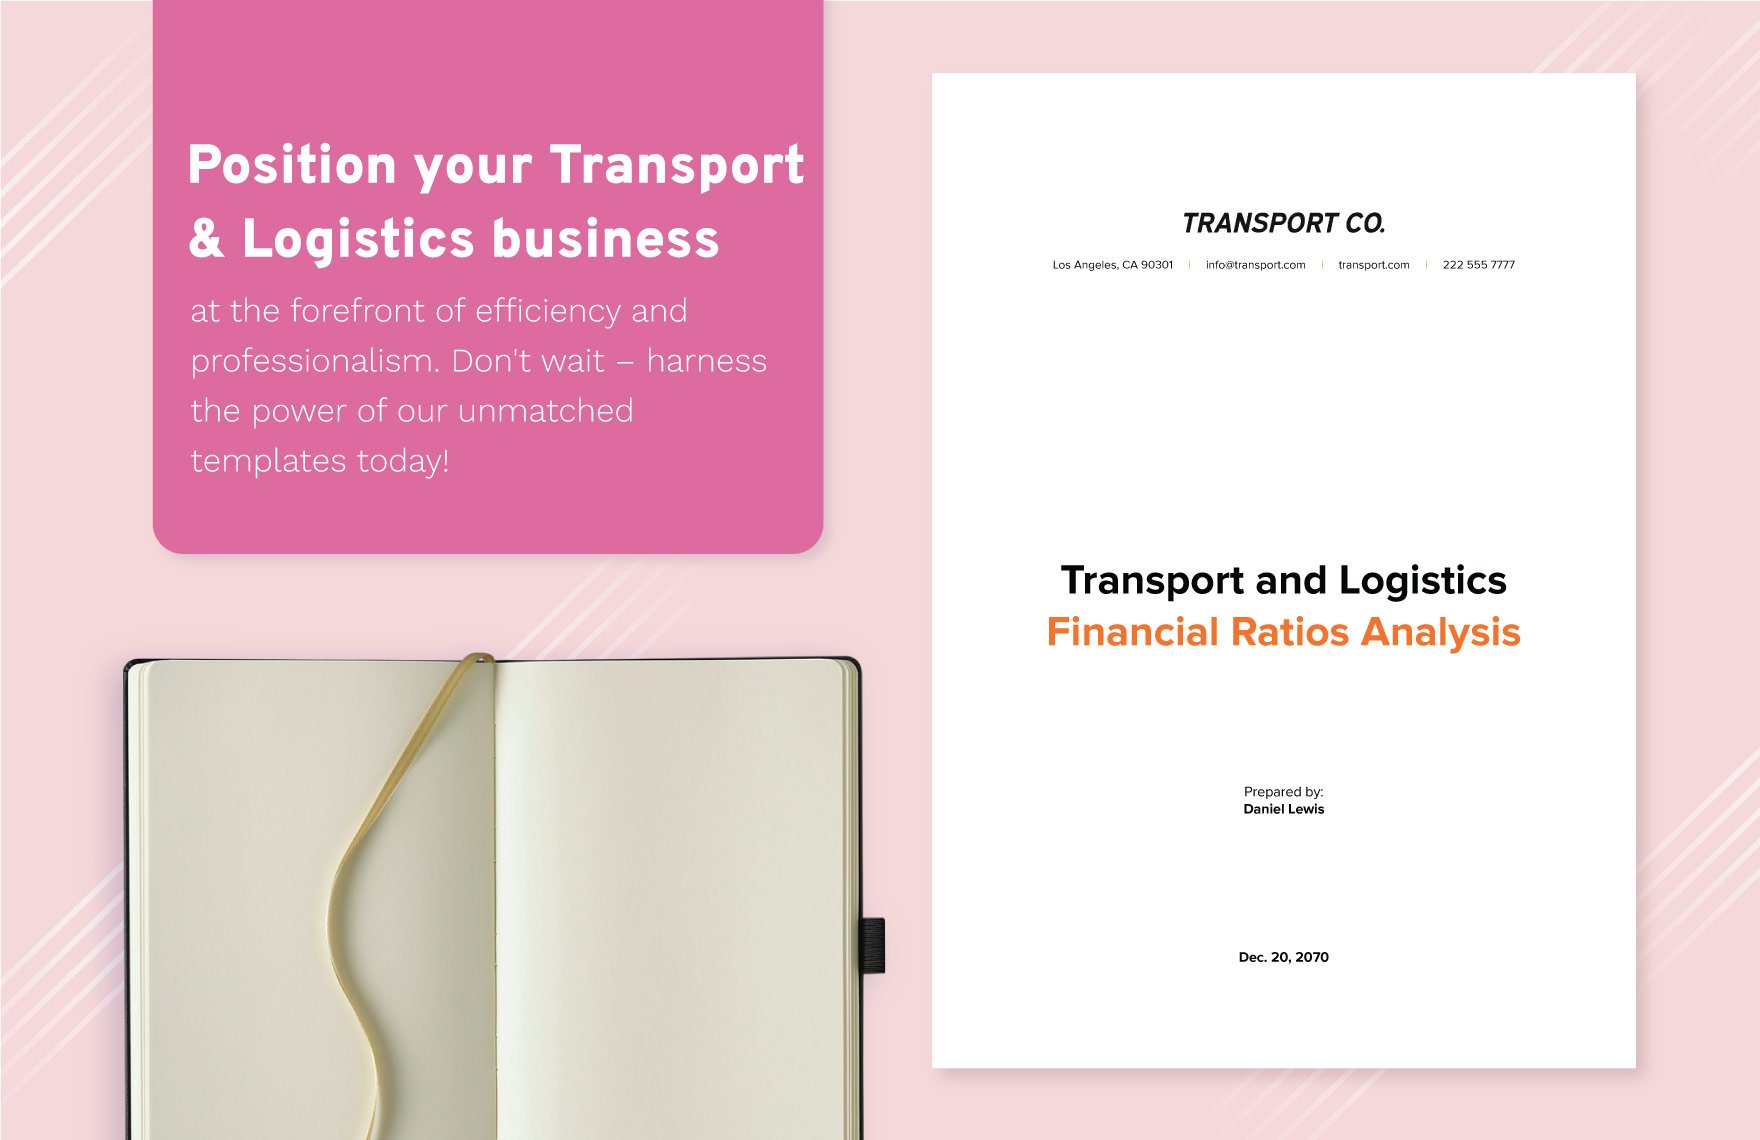 Transport and Logistics Financial Ratios Analysis Template